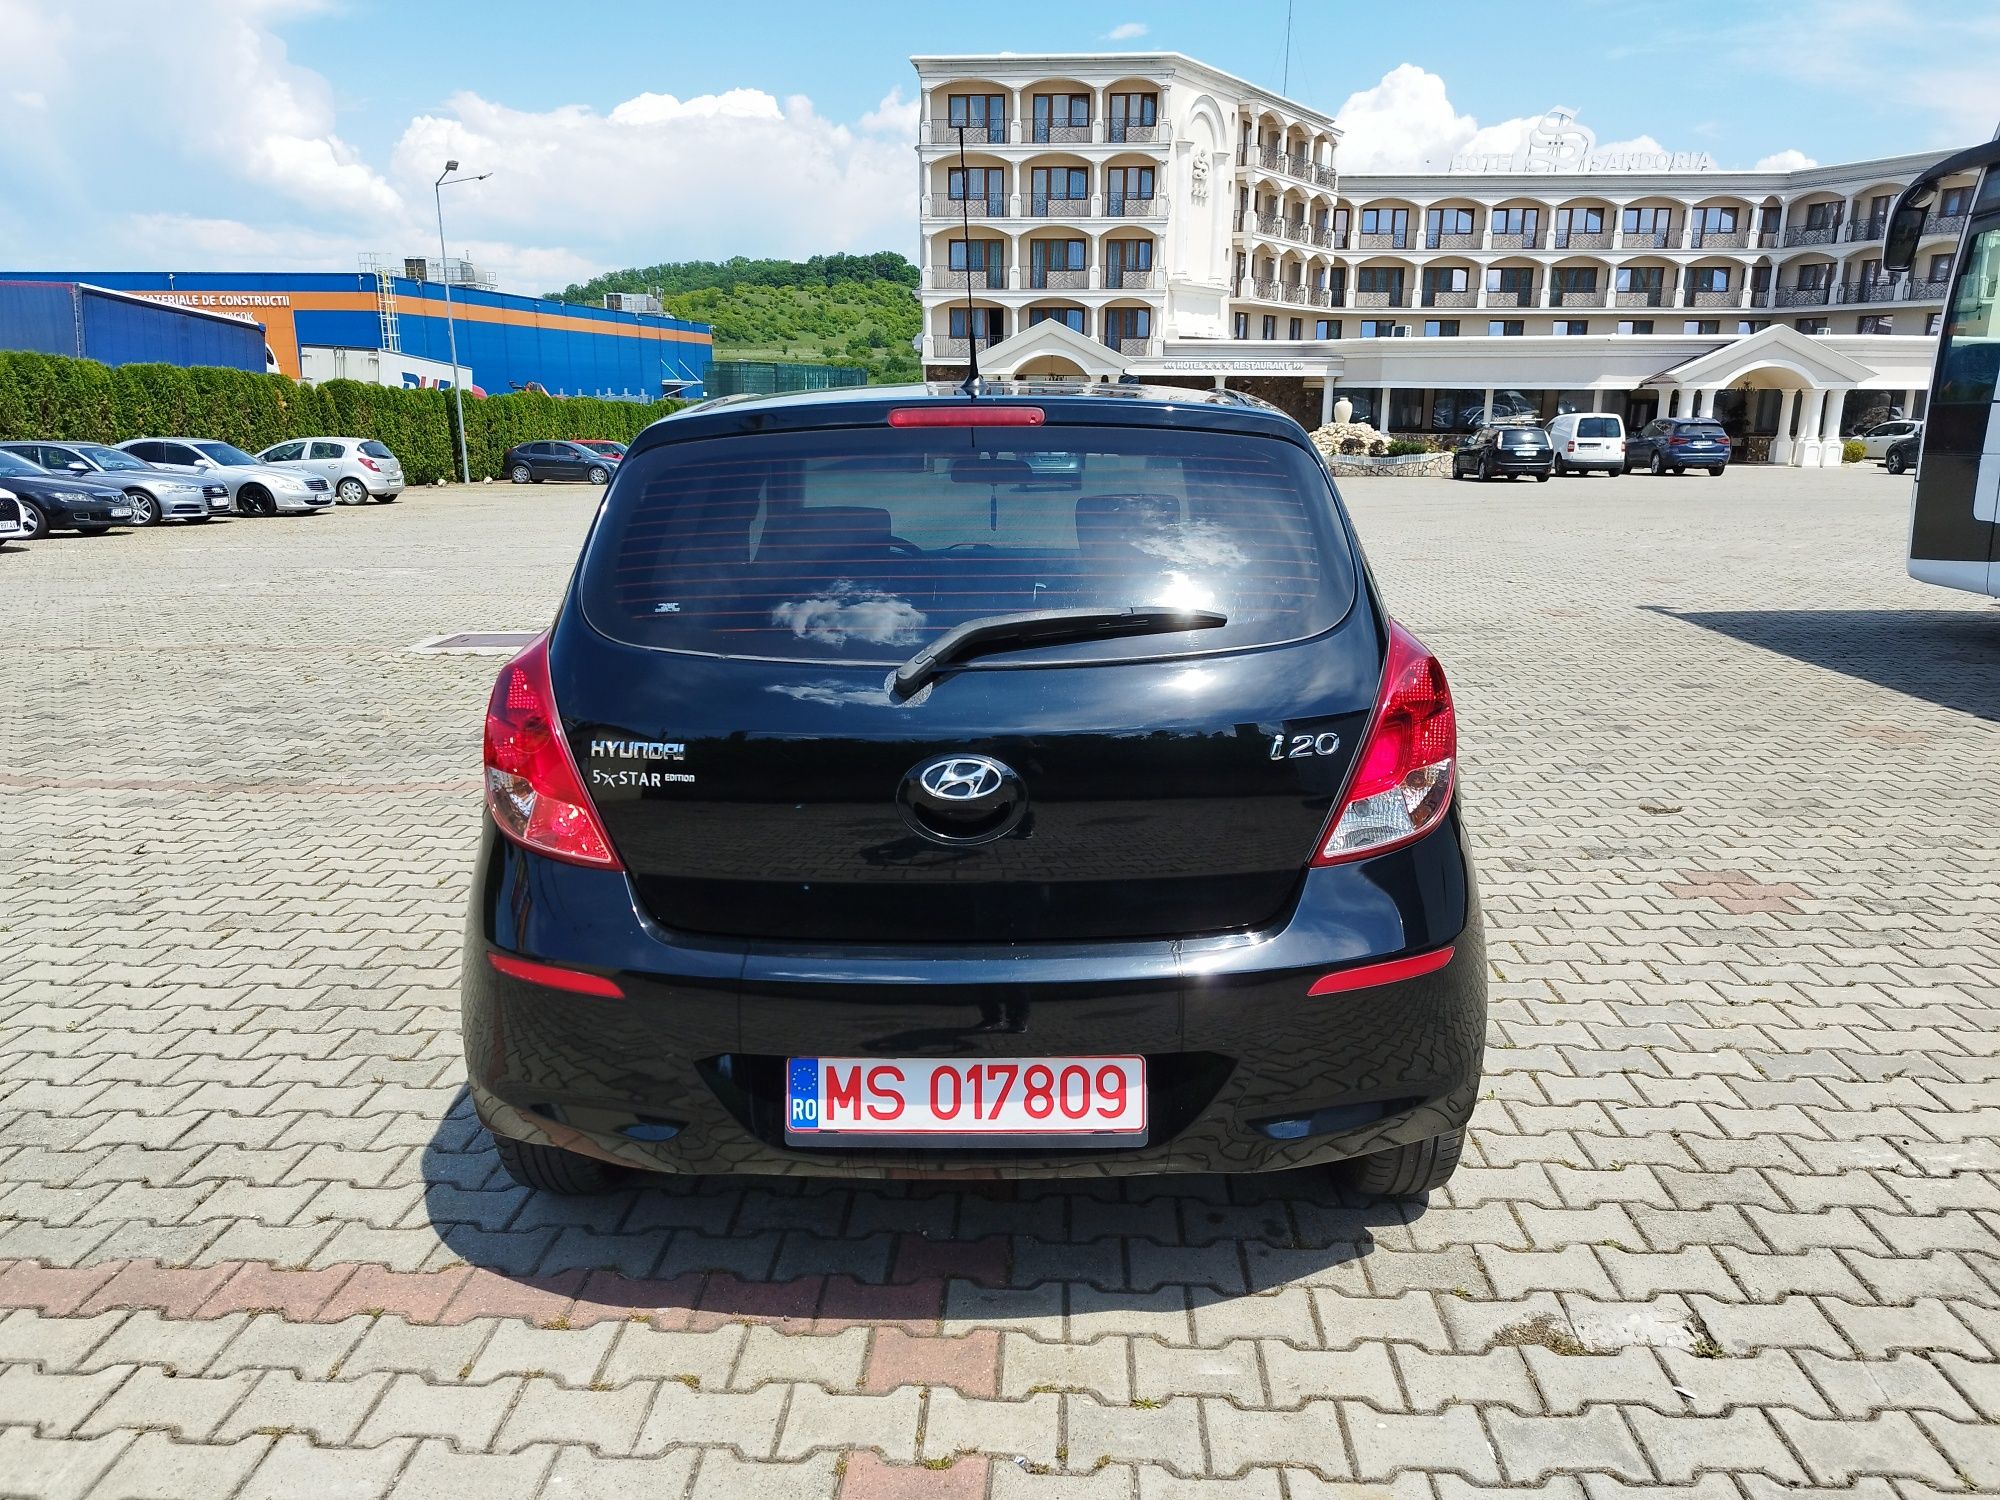 Hyundai I20, 2013,  1.25 benzina, euro 5